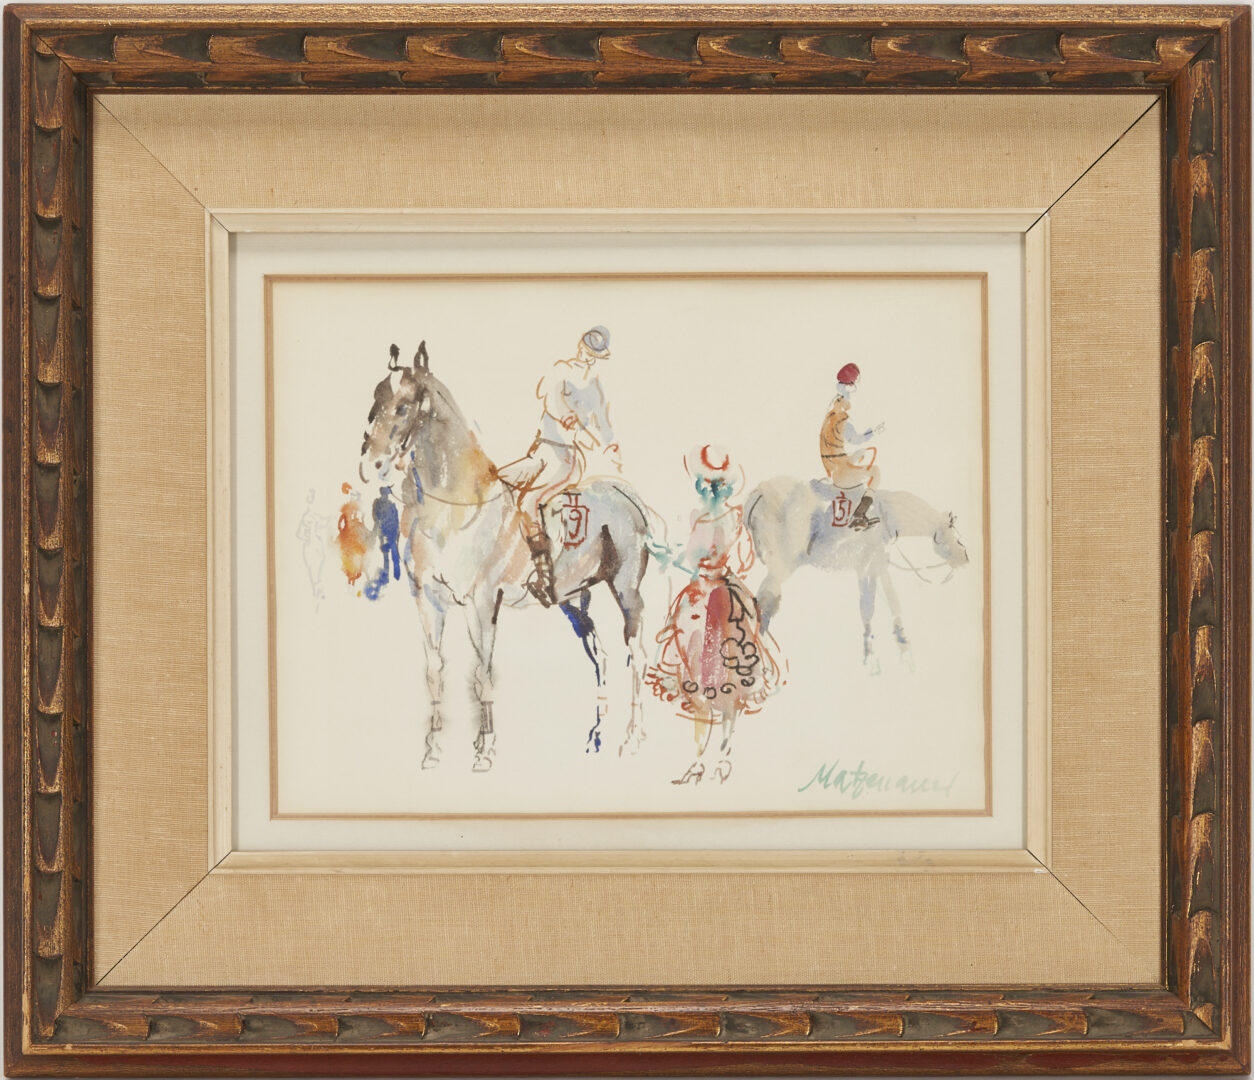 Lot 641: Hugo Matzenauer Pair of Equestrian Watercolors